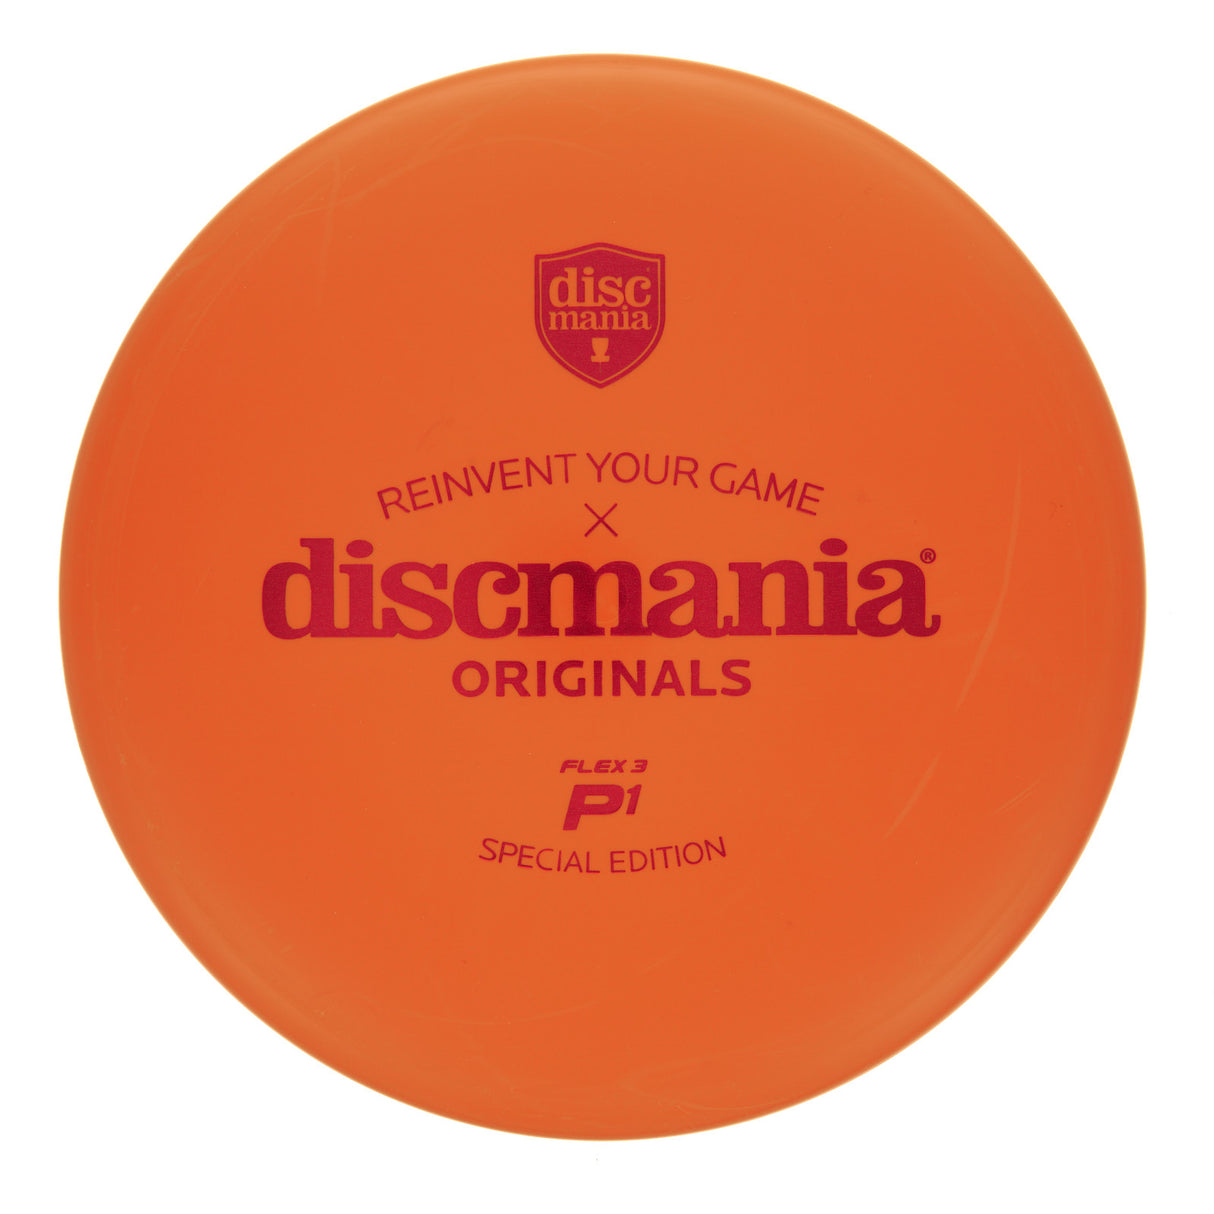 Discmania P1 - Special Edition D-Line Flex 3 175g | Style 0001